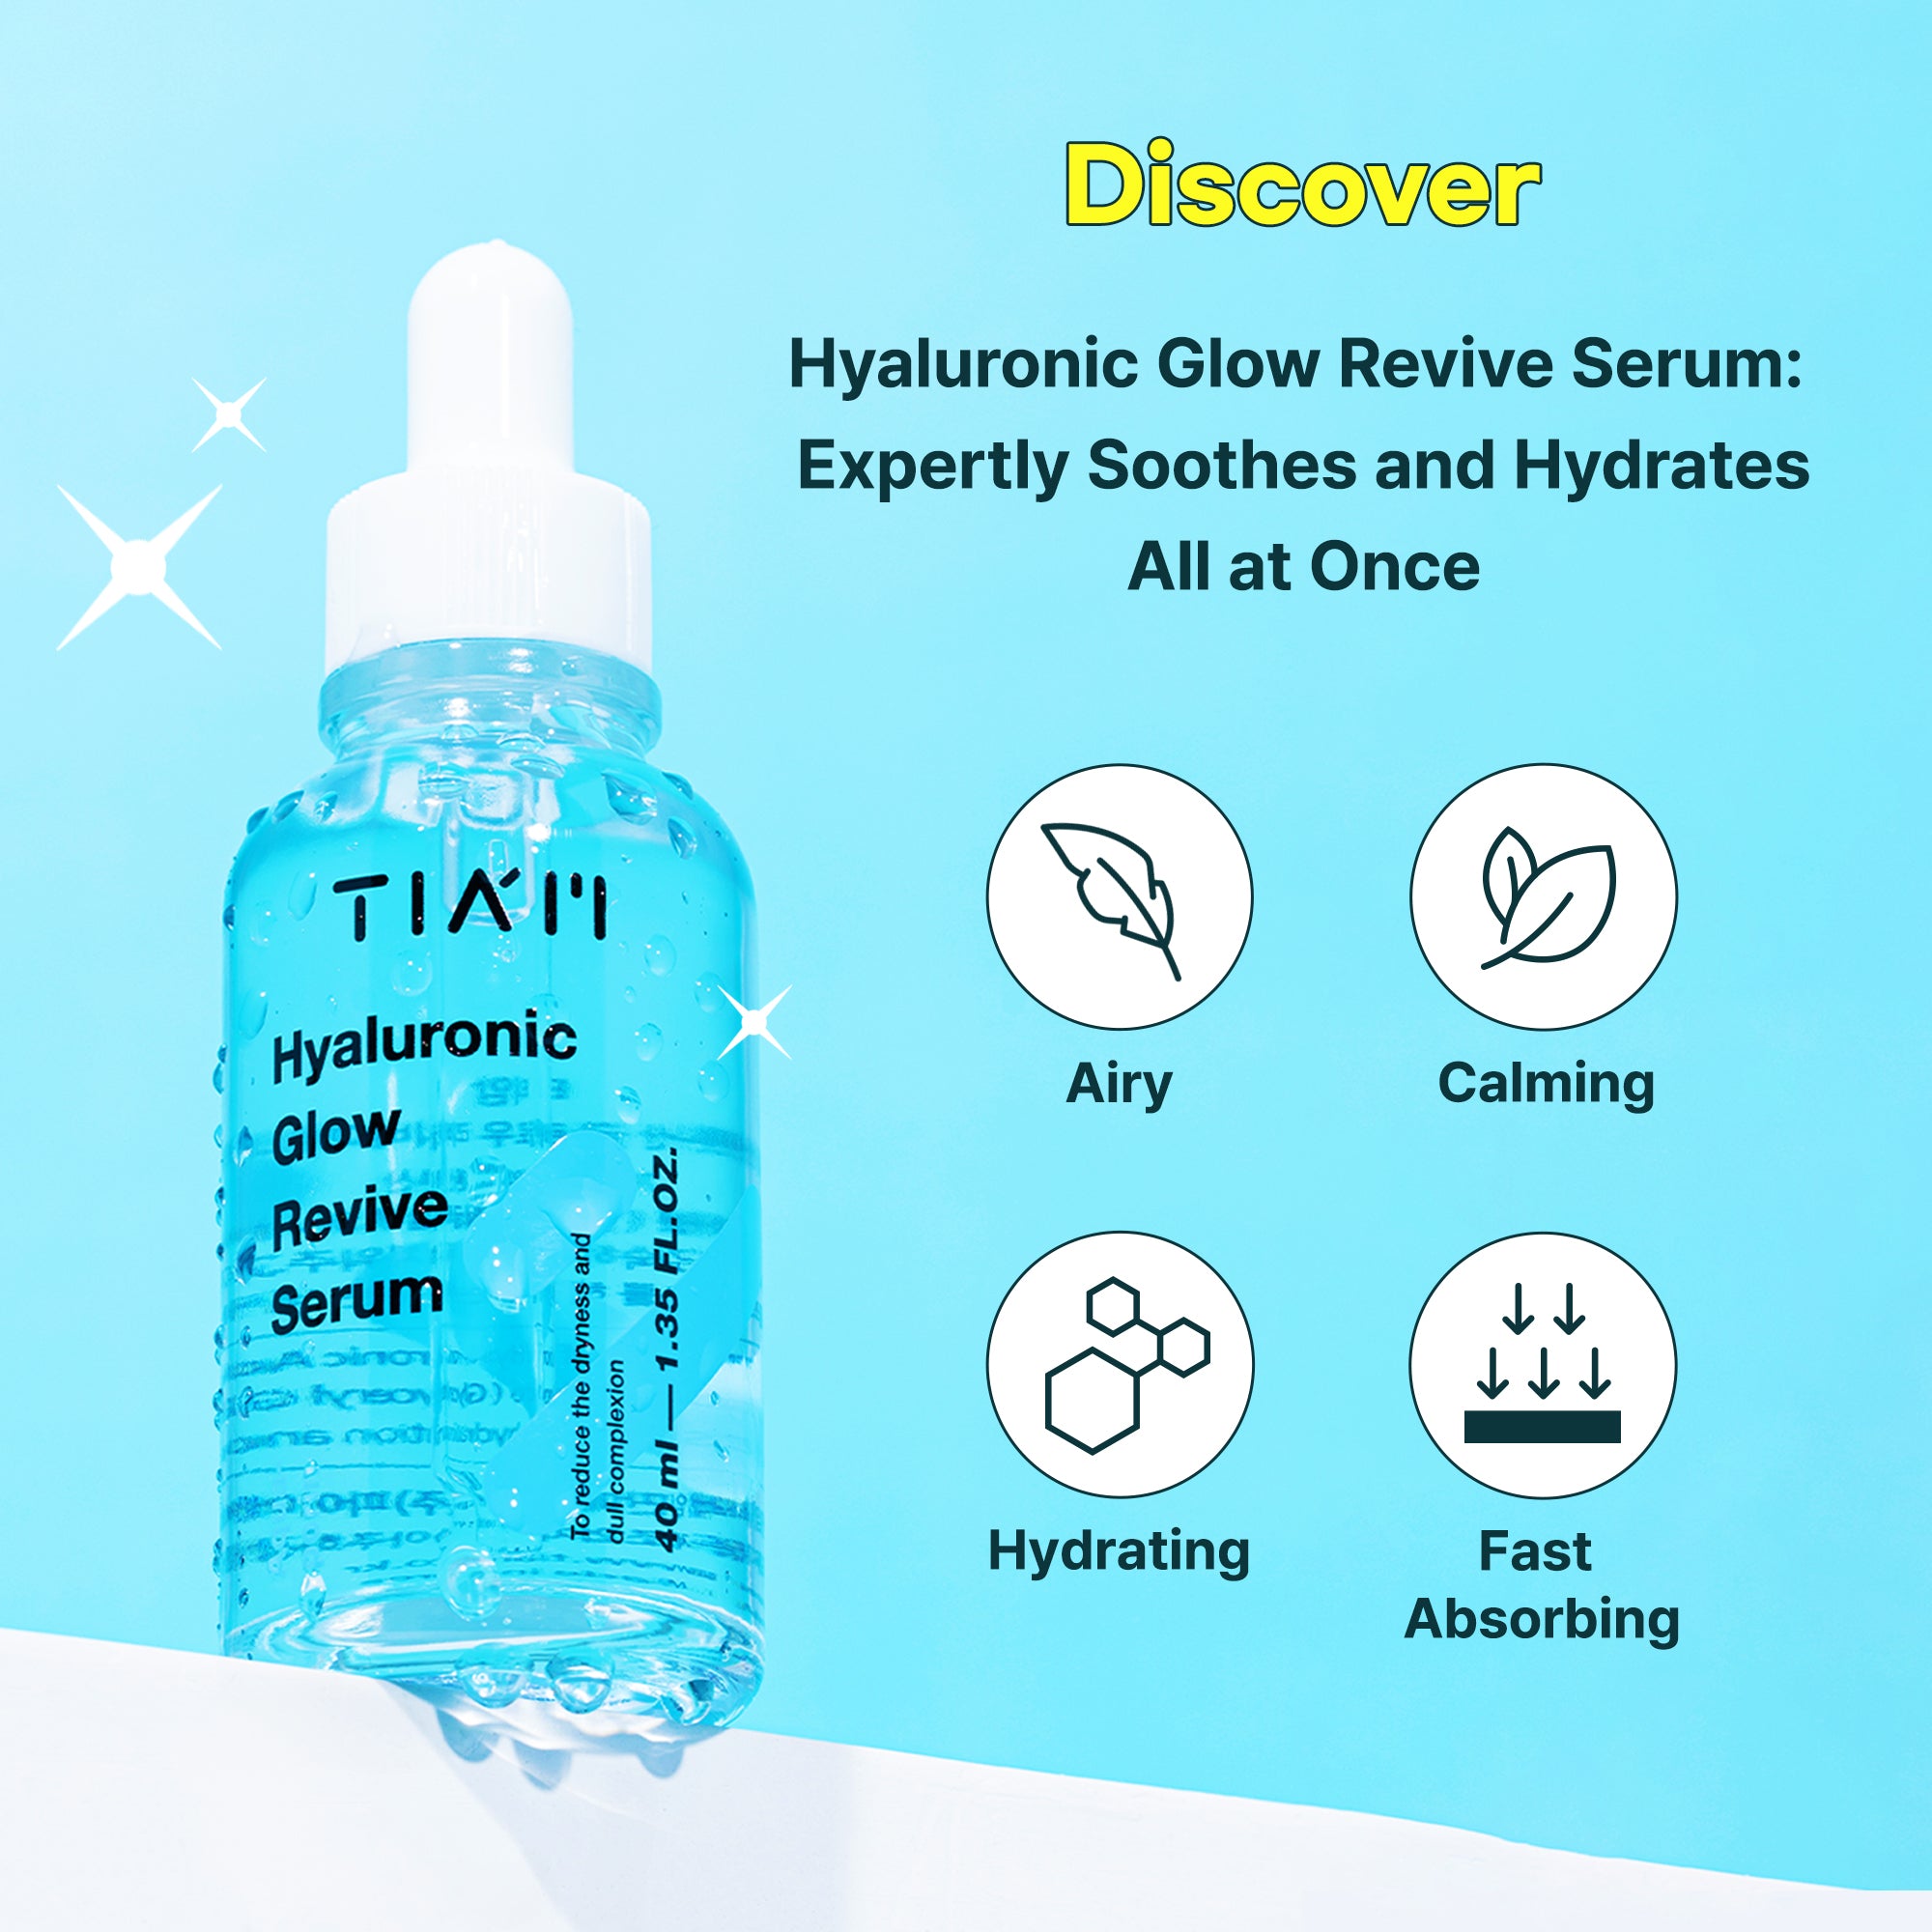 Hyaluronic Glow Revive Serum